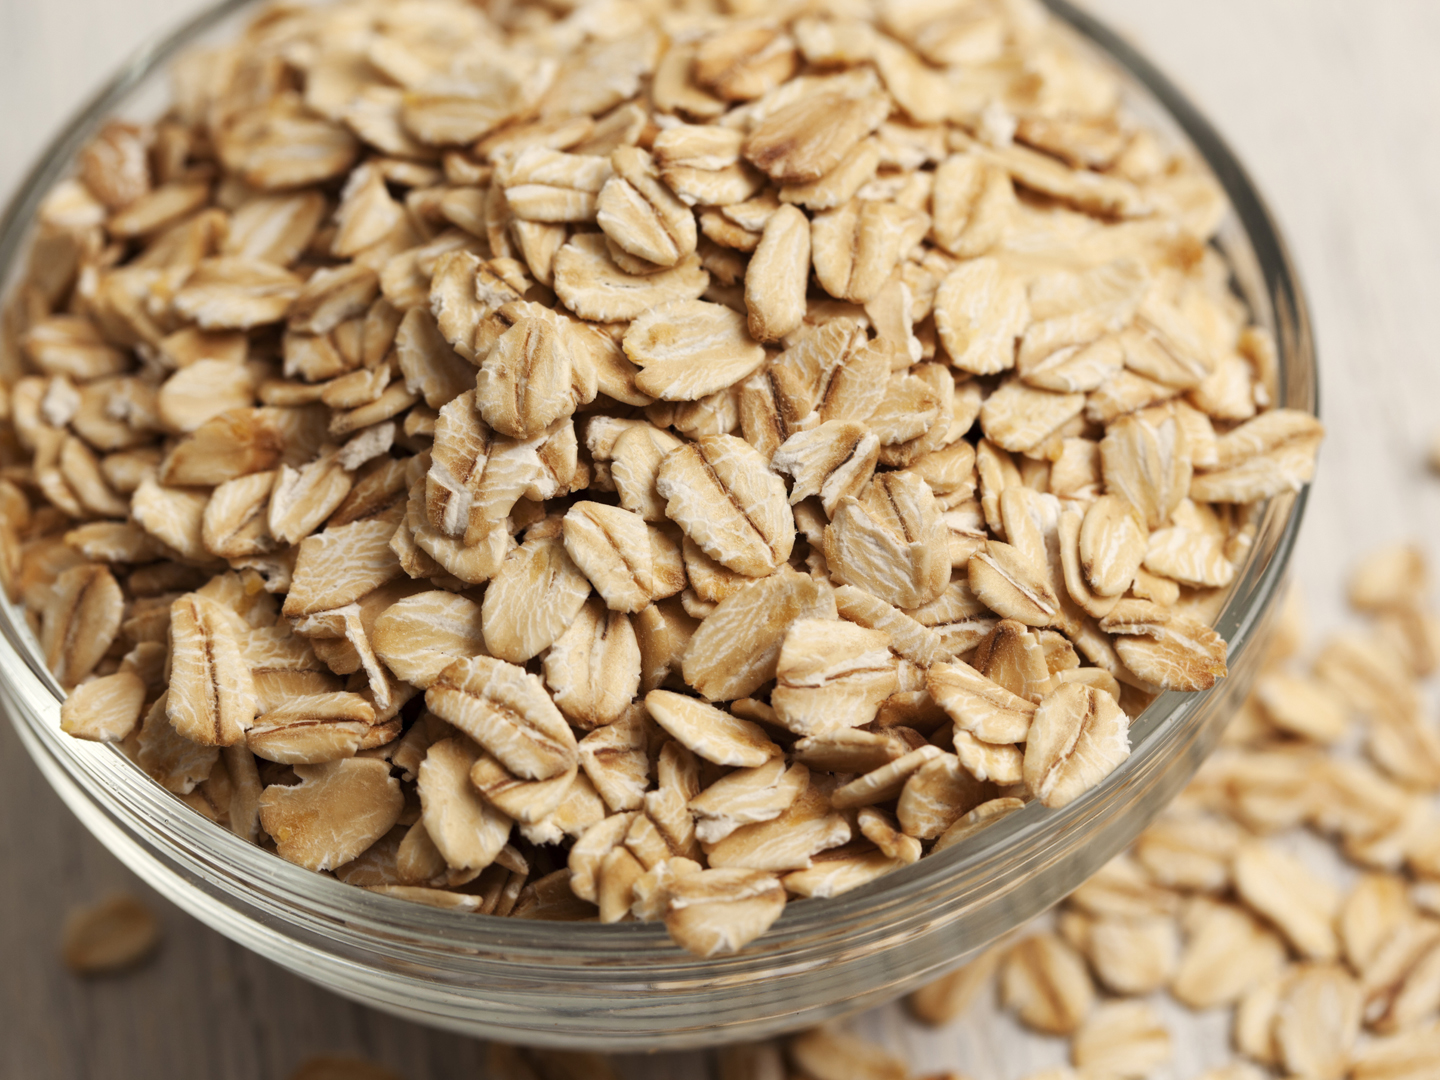 Health benefits of oats